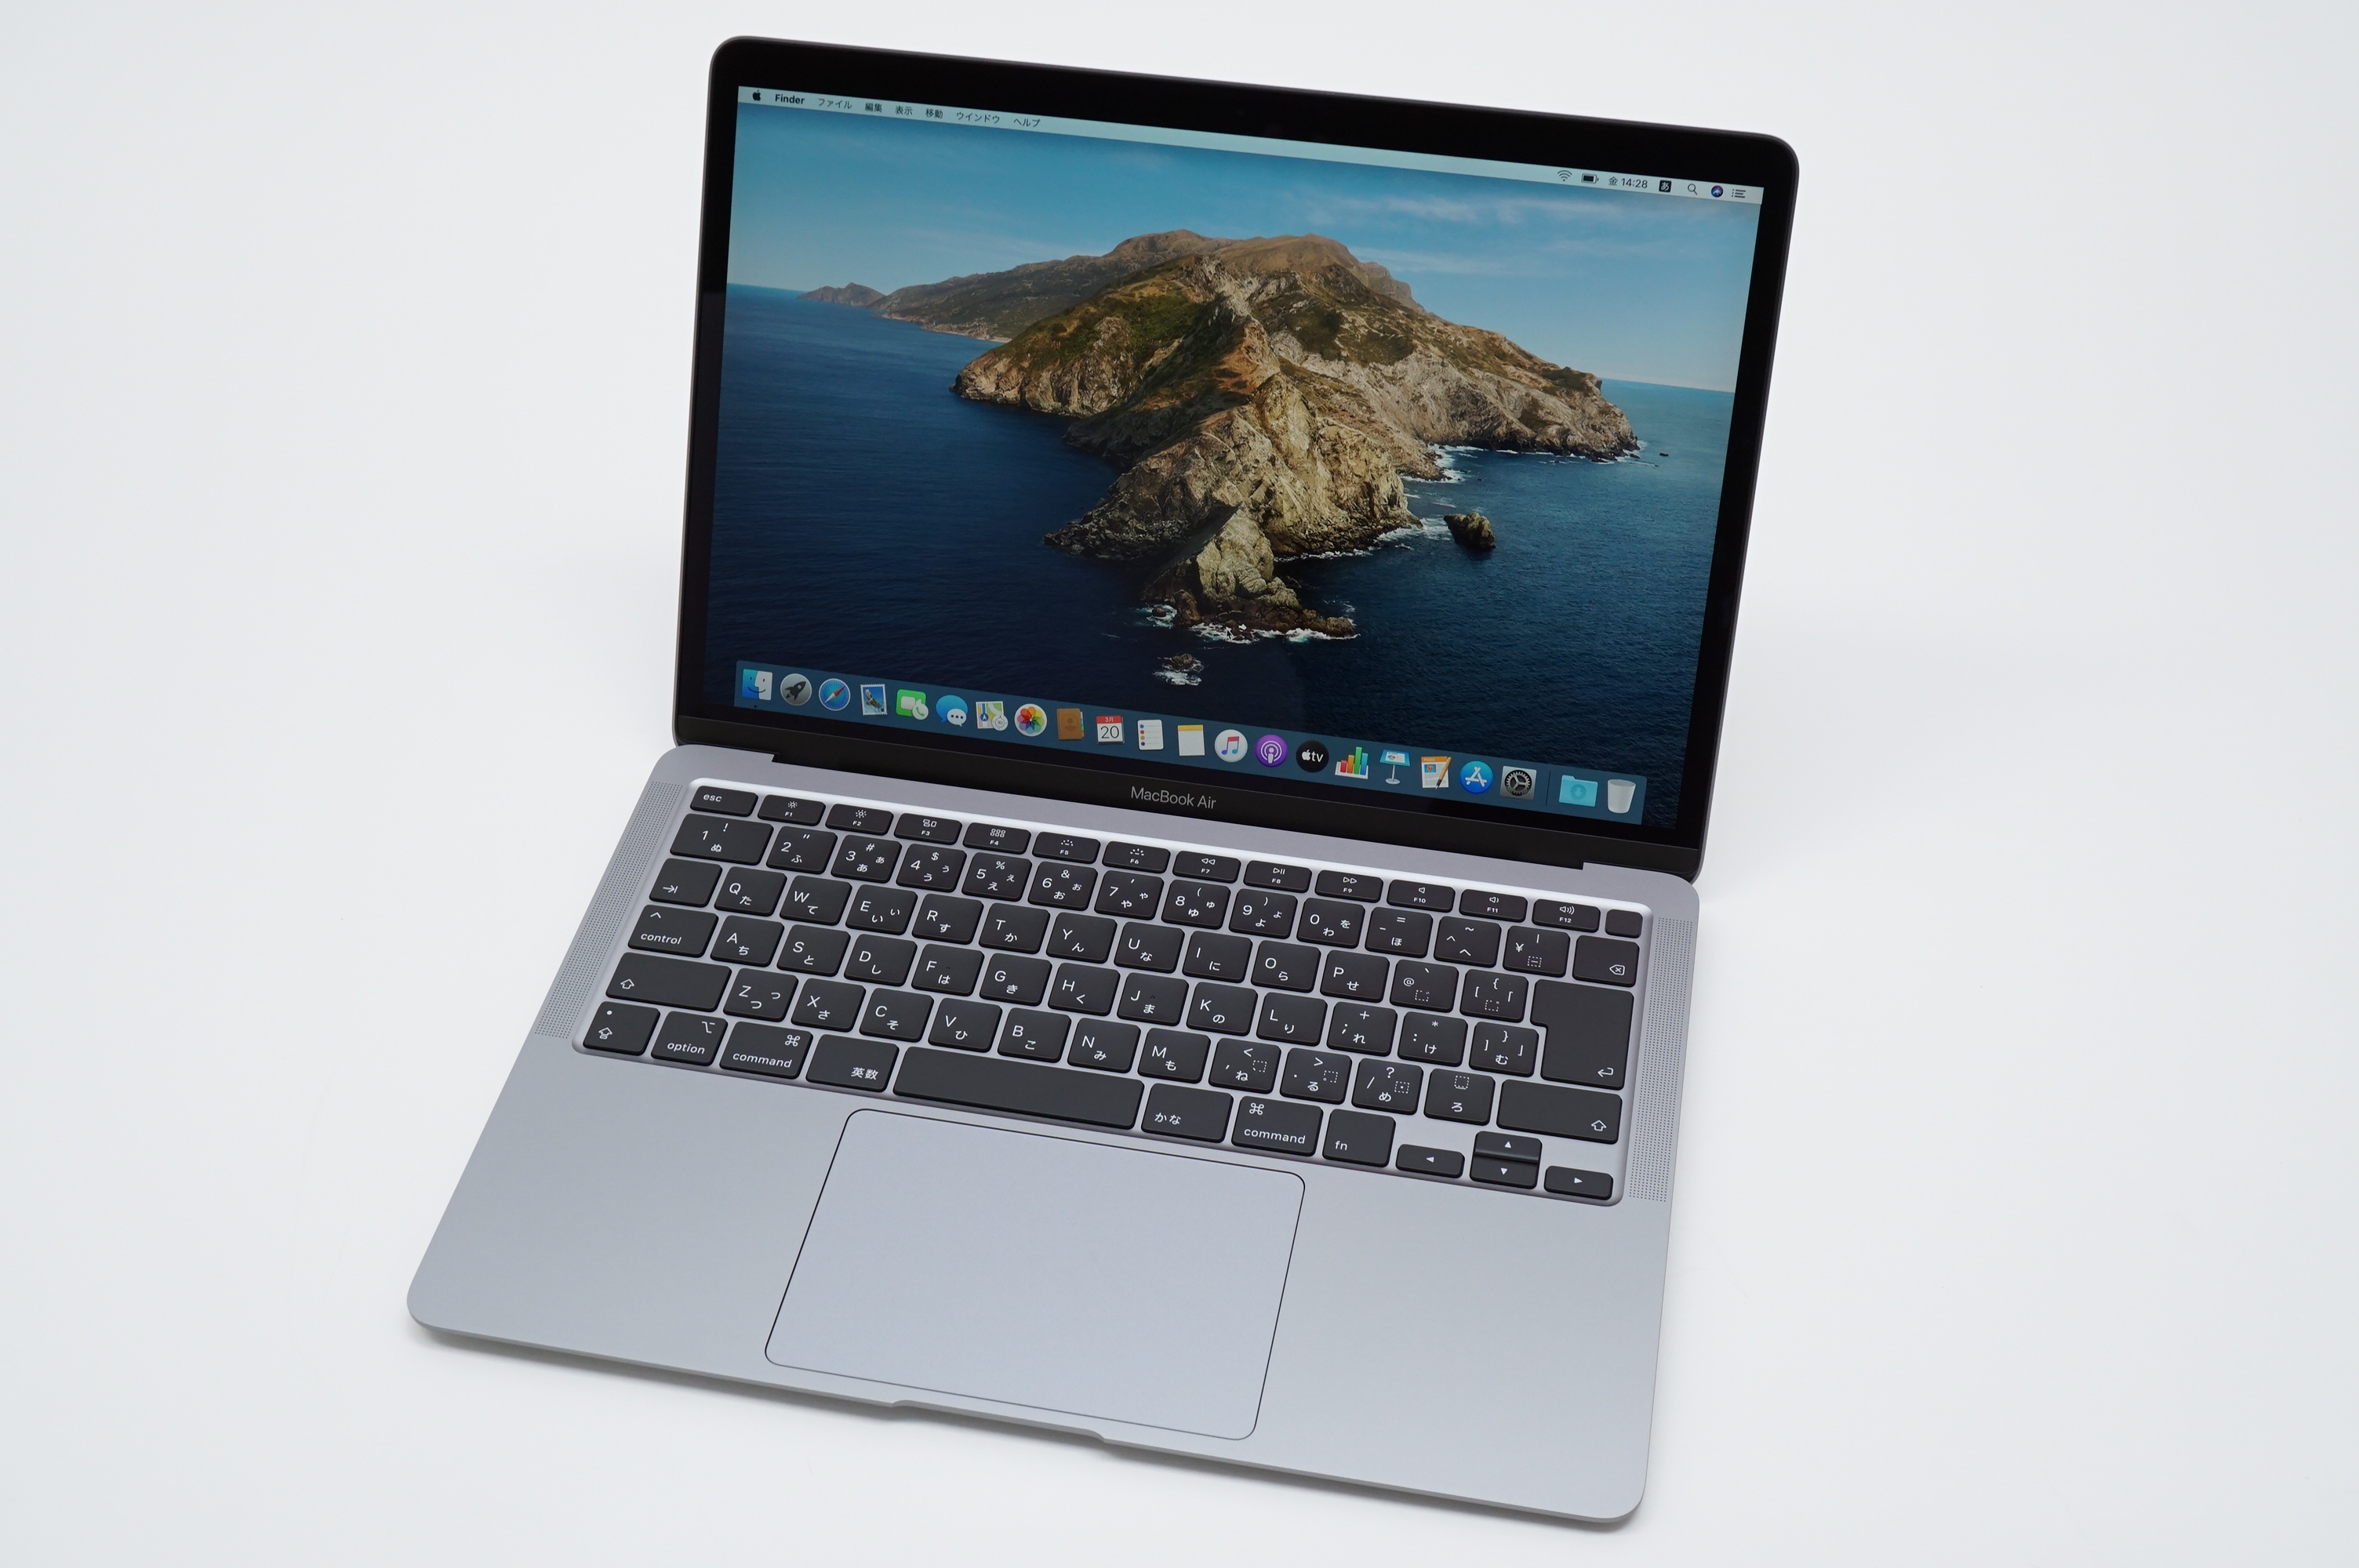 PC短評】「MacBook Air 2020」を一足早く開封。前モデルと性能を簡単に比較してみた - PC Watch